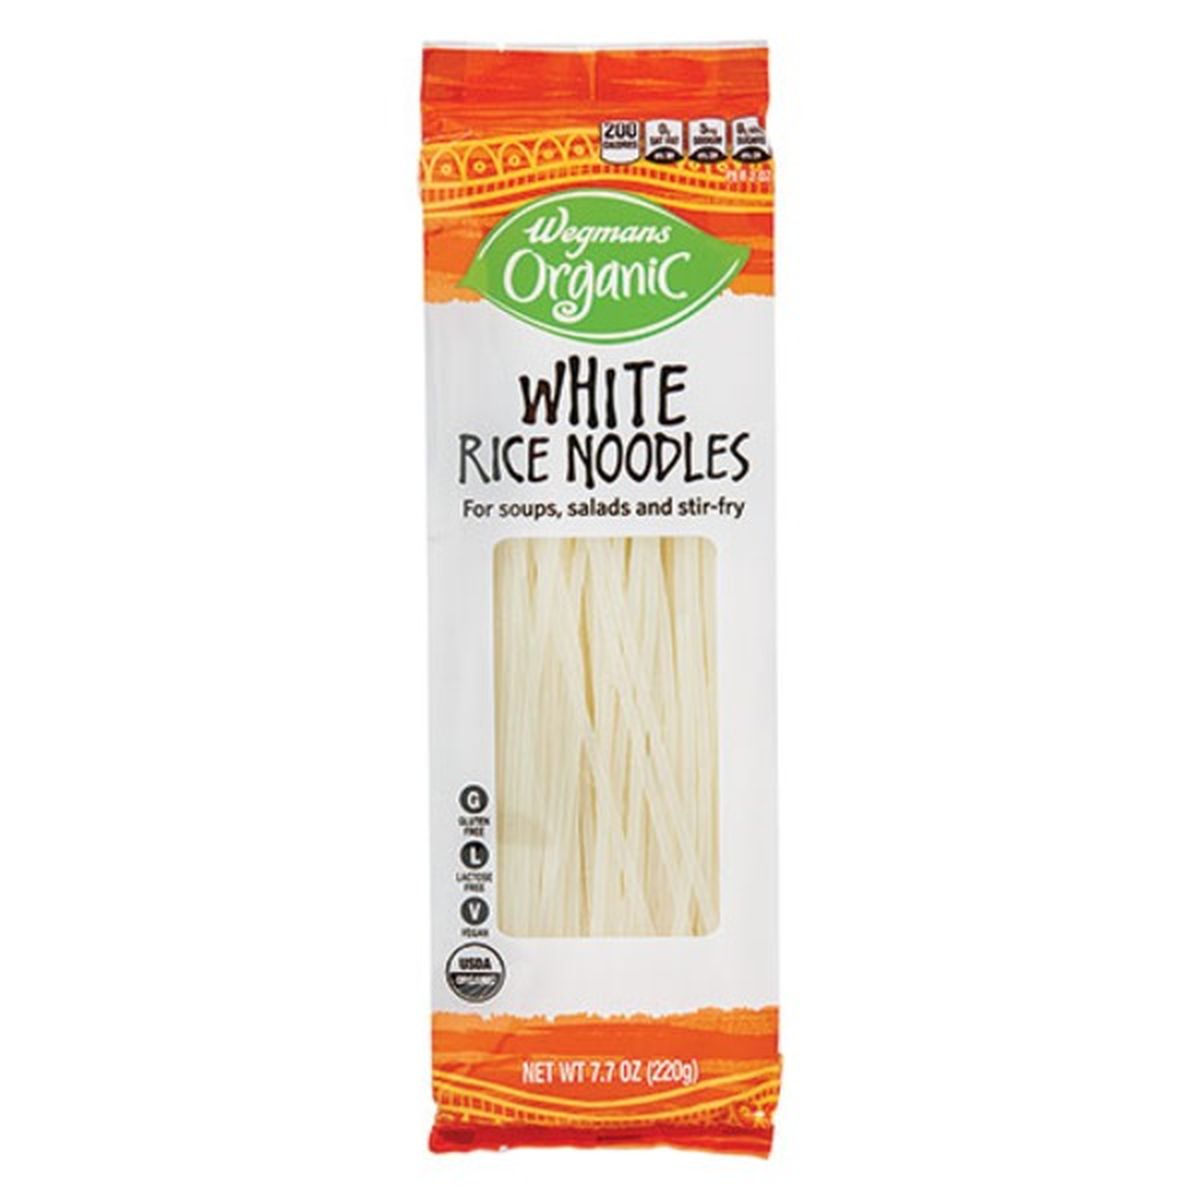 Calories in Wegmans Organic White Rice Noodles